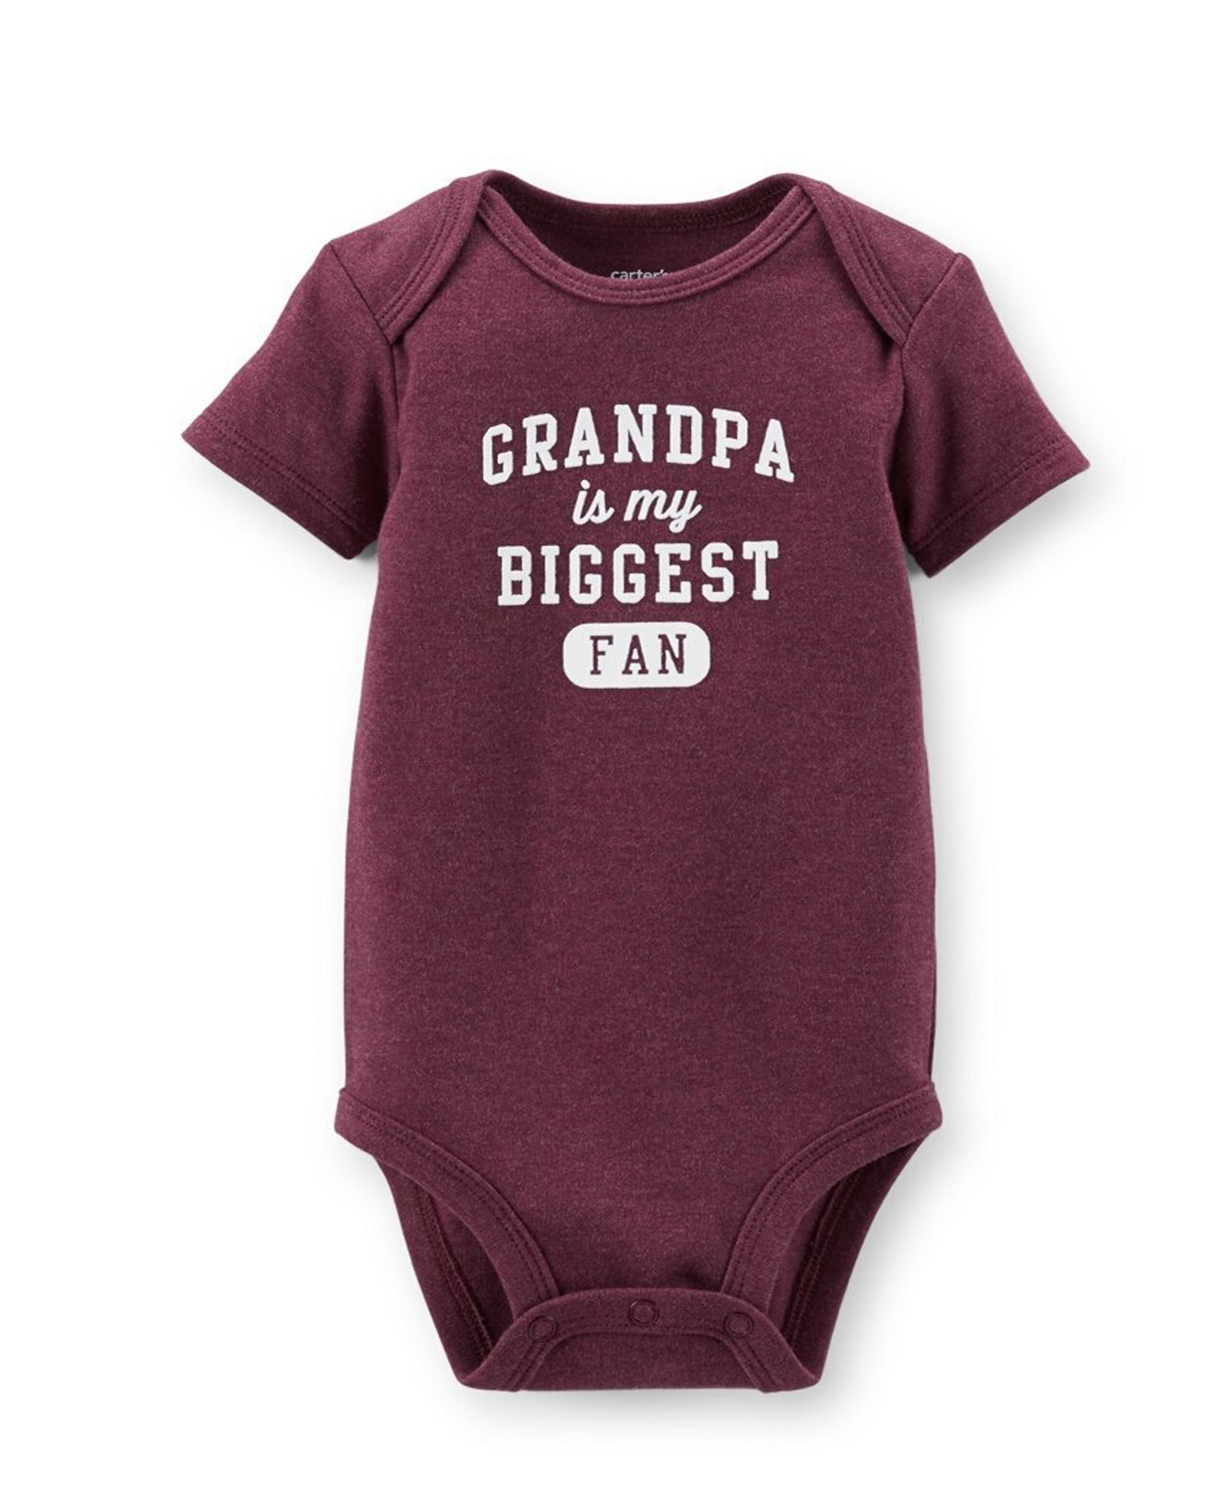 cute baby clothes cheap cute carteru0027s slogan baby bodysuit grandpa is biggest fan 6 months vntzoeg